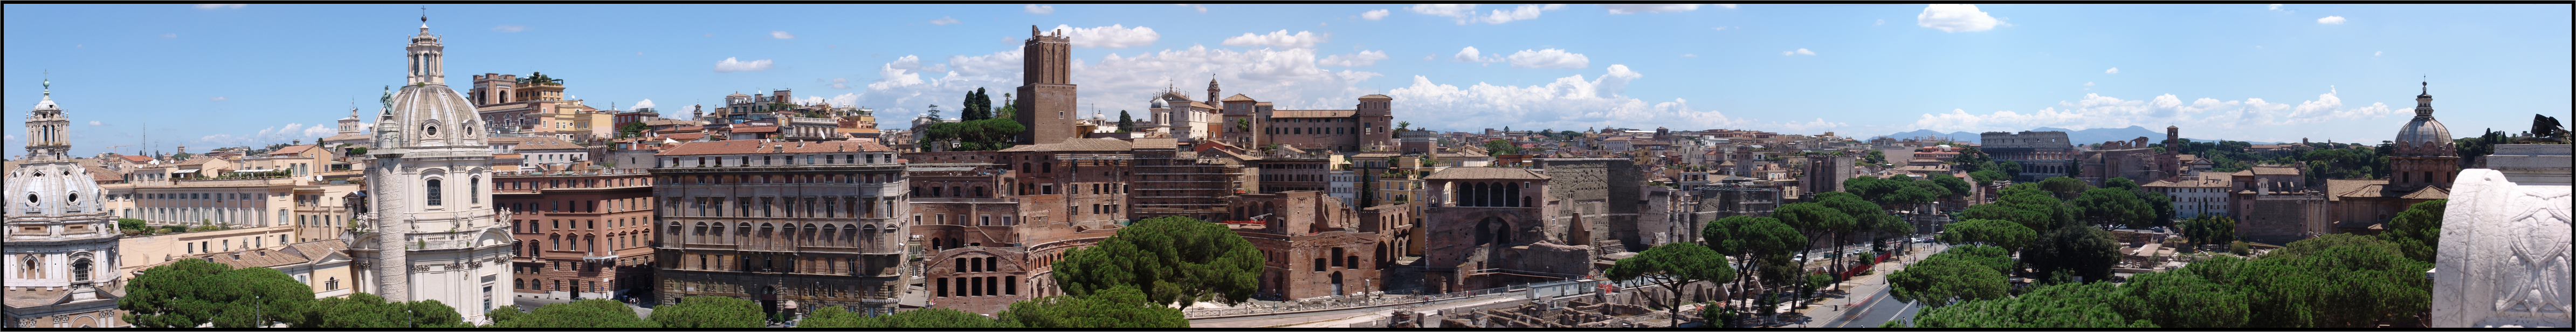 La Colonne de Trajan, Via dei Fori Imperiali, Rome, Italie, Août 2006